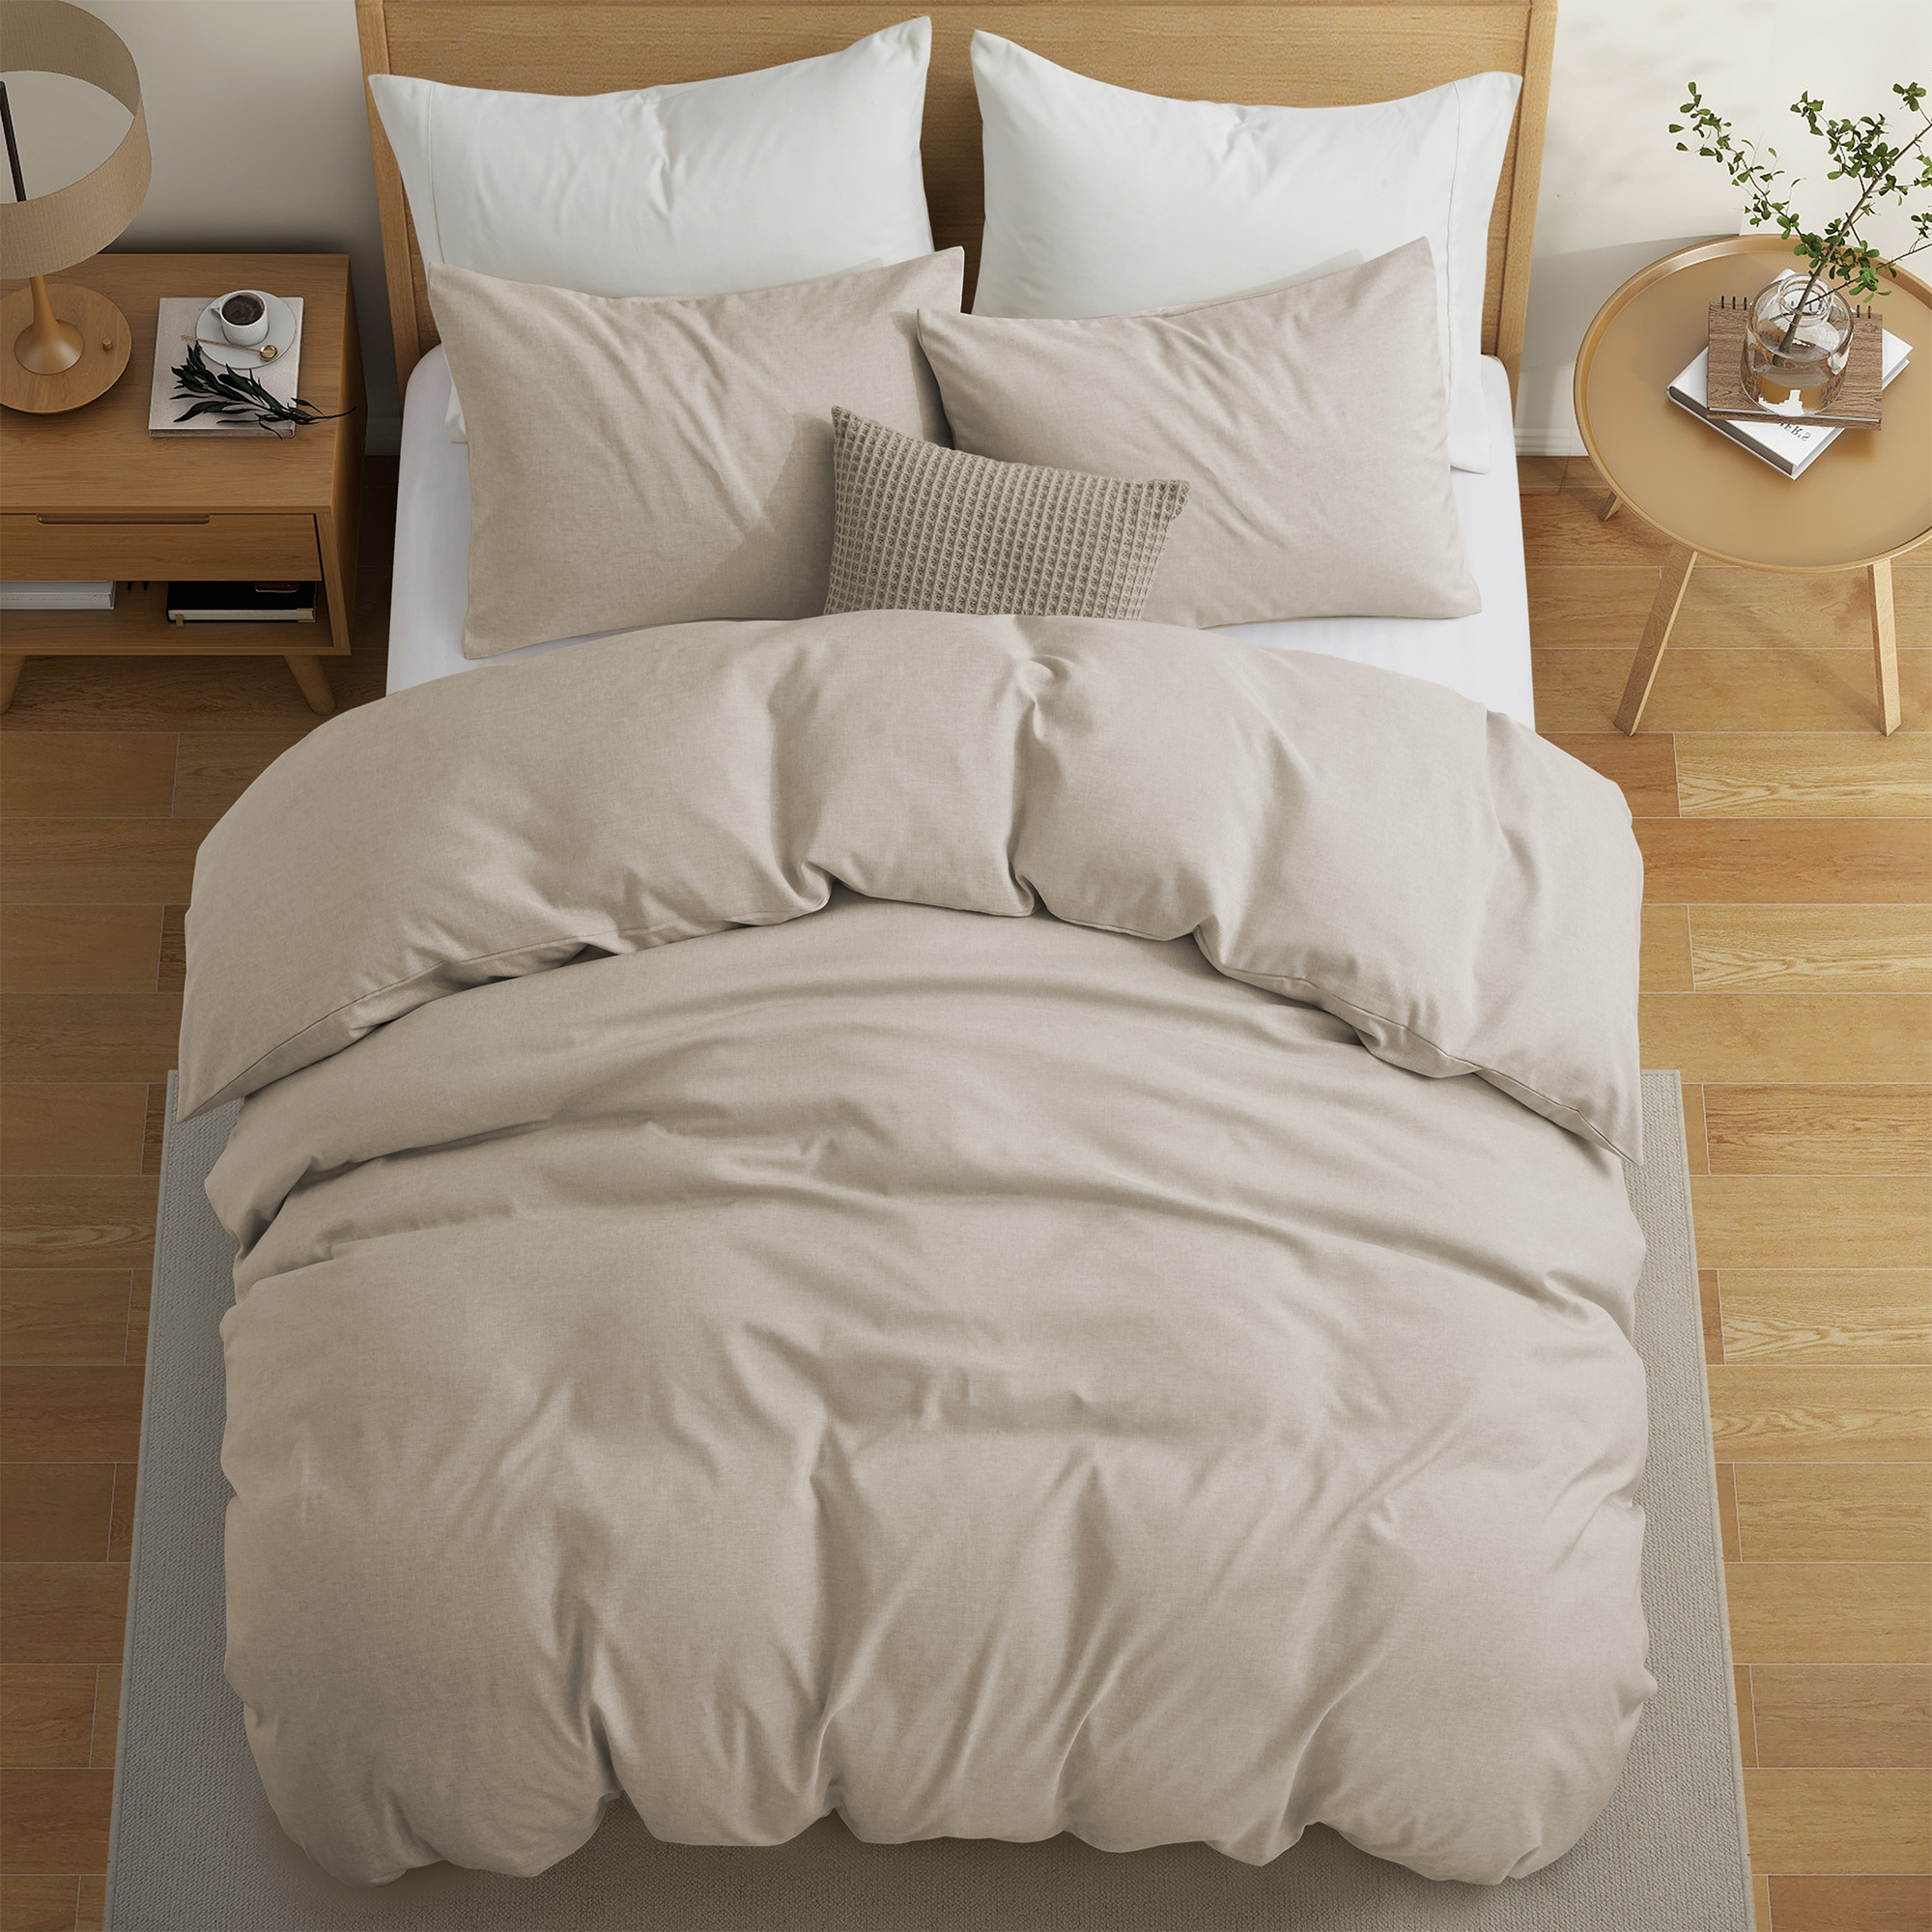 Ultimate Luxury Bedding Bundle: All Season Goose Down Comforter, 2 Pack Gusset Pillows, And Faux Linen Duvet Cover Set - White Bundles Optio